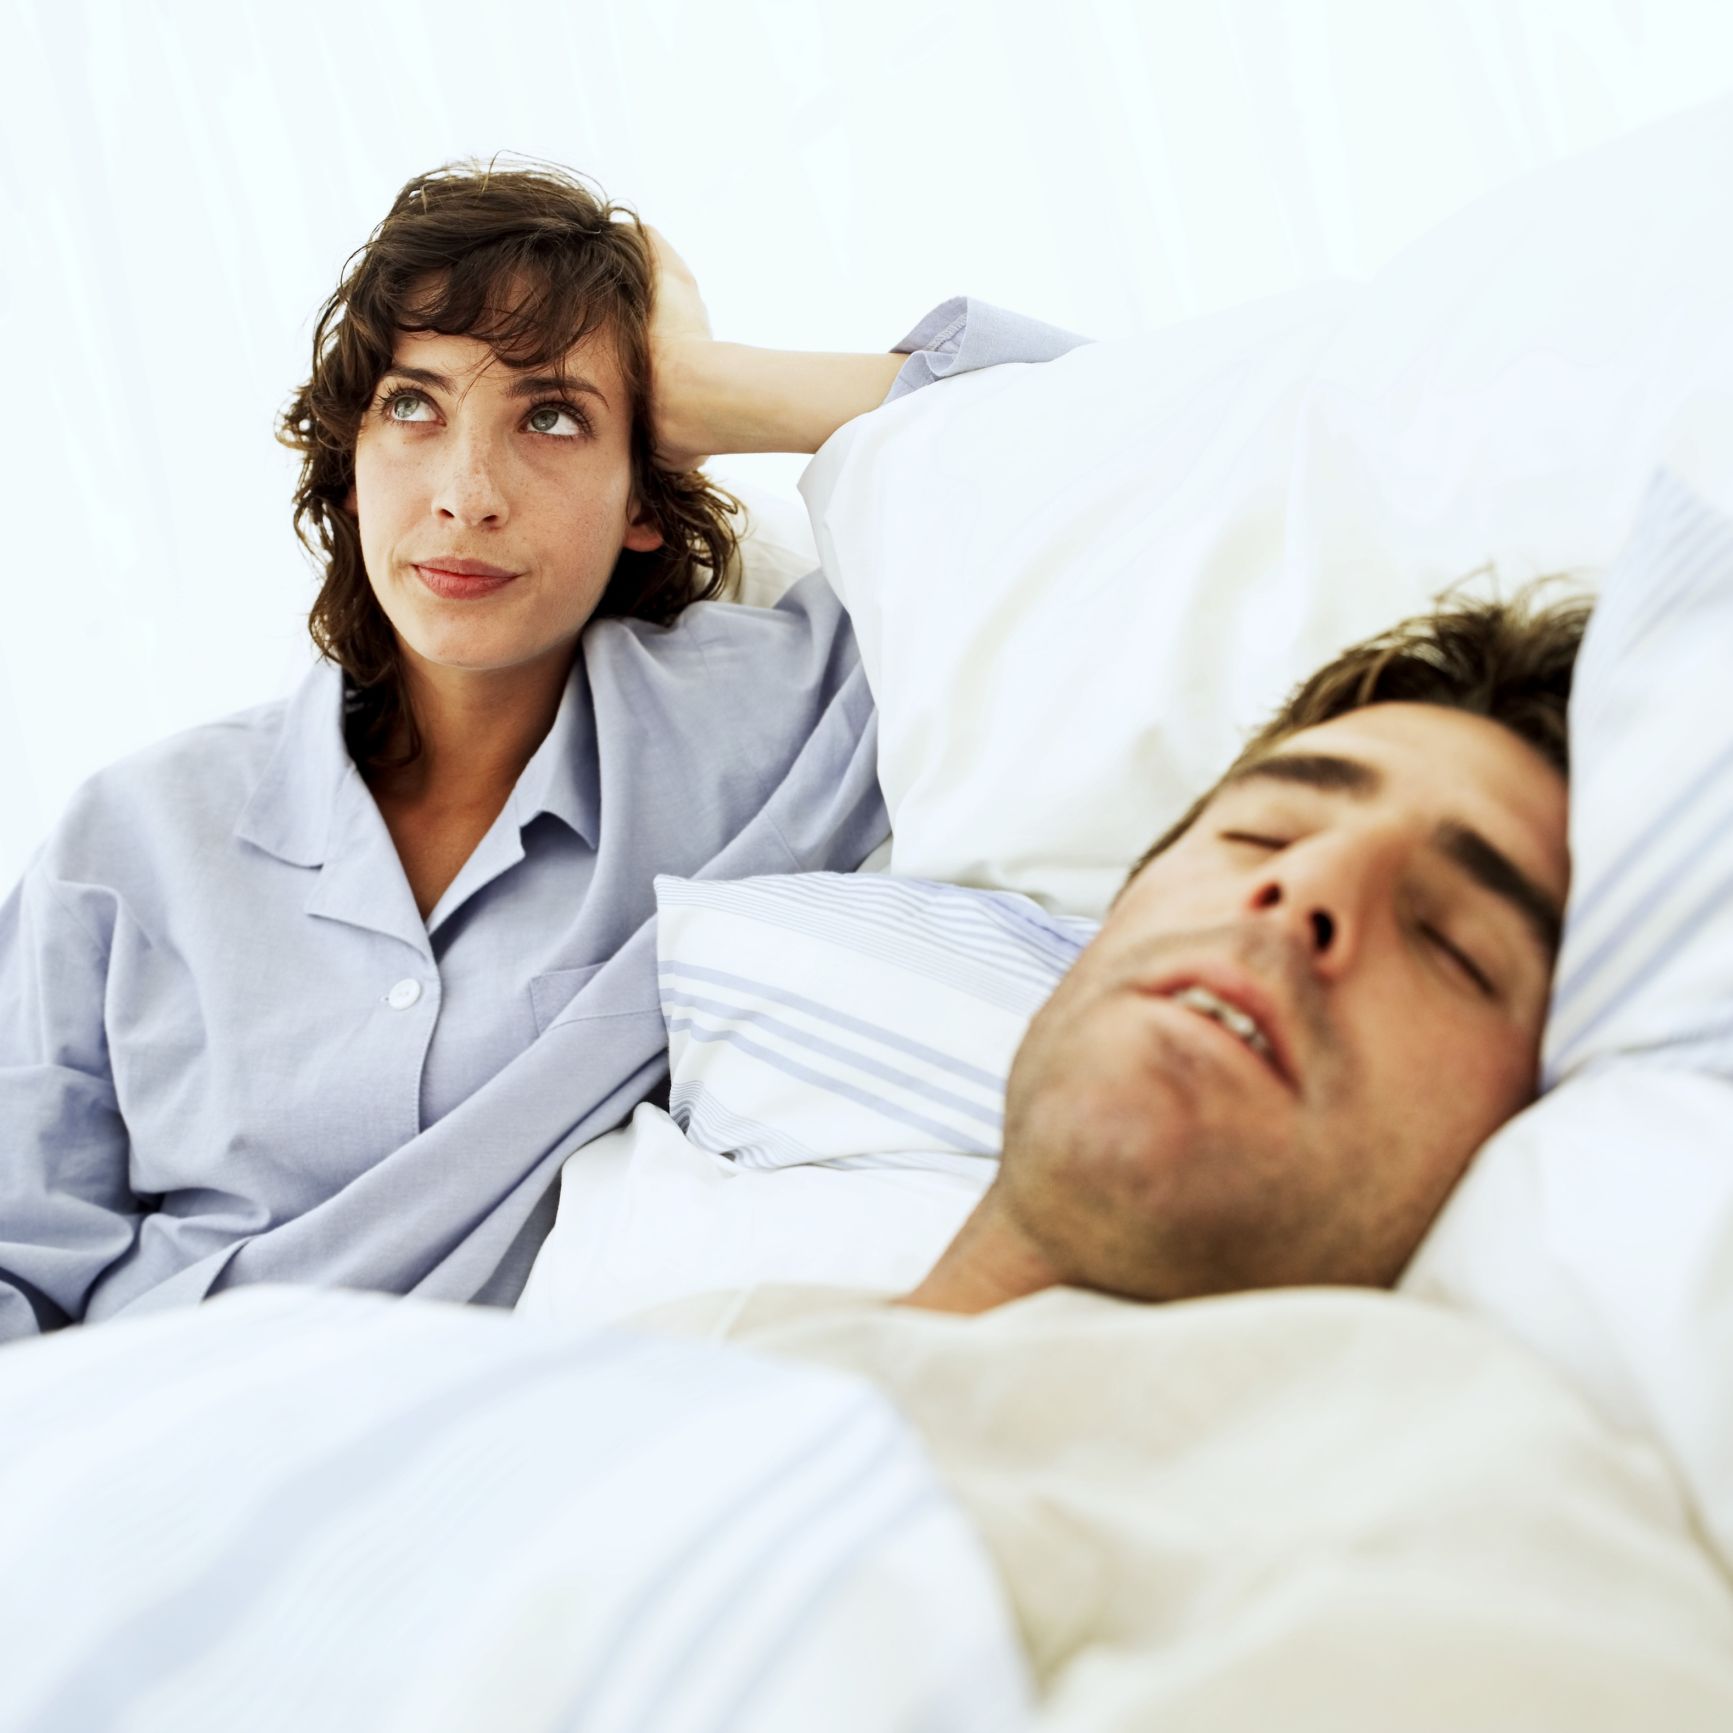 Sex While Sleeping Sex Porn - Men fall asleep, women cuddle and other post-sex behaviors that affect  relationships | CNN